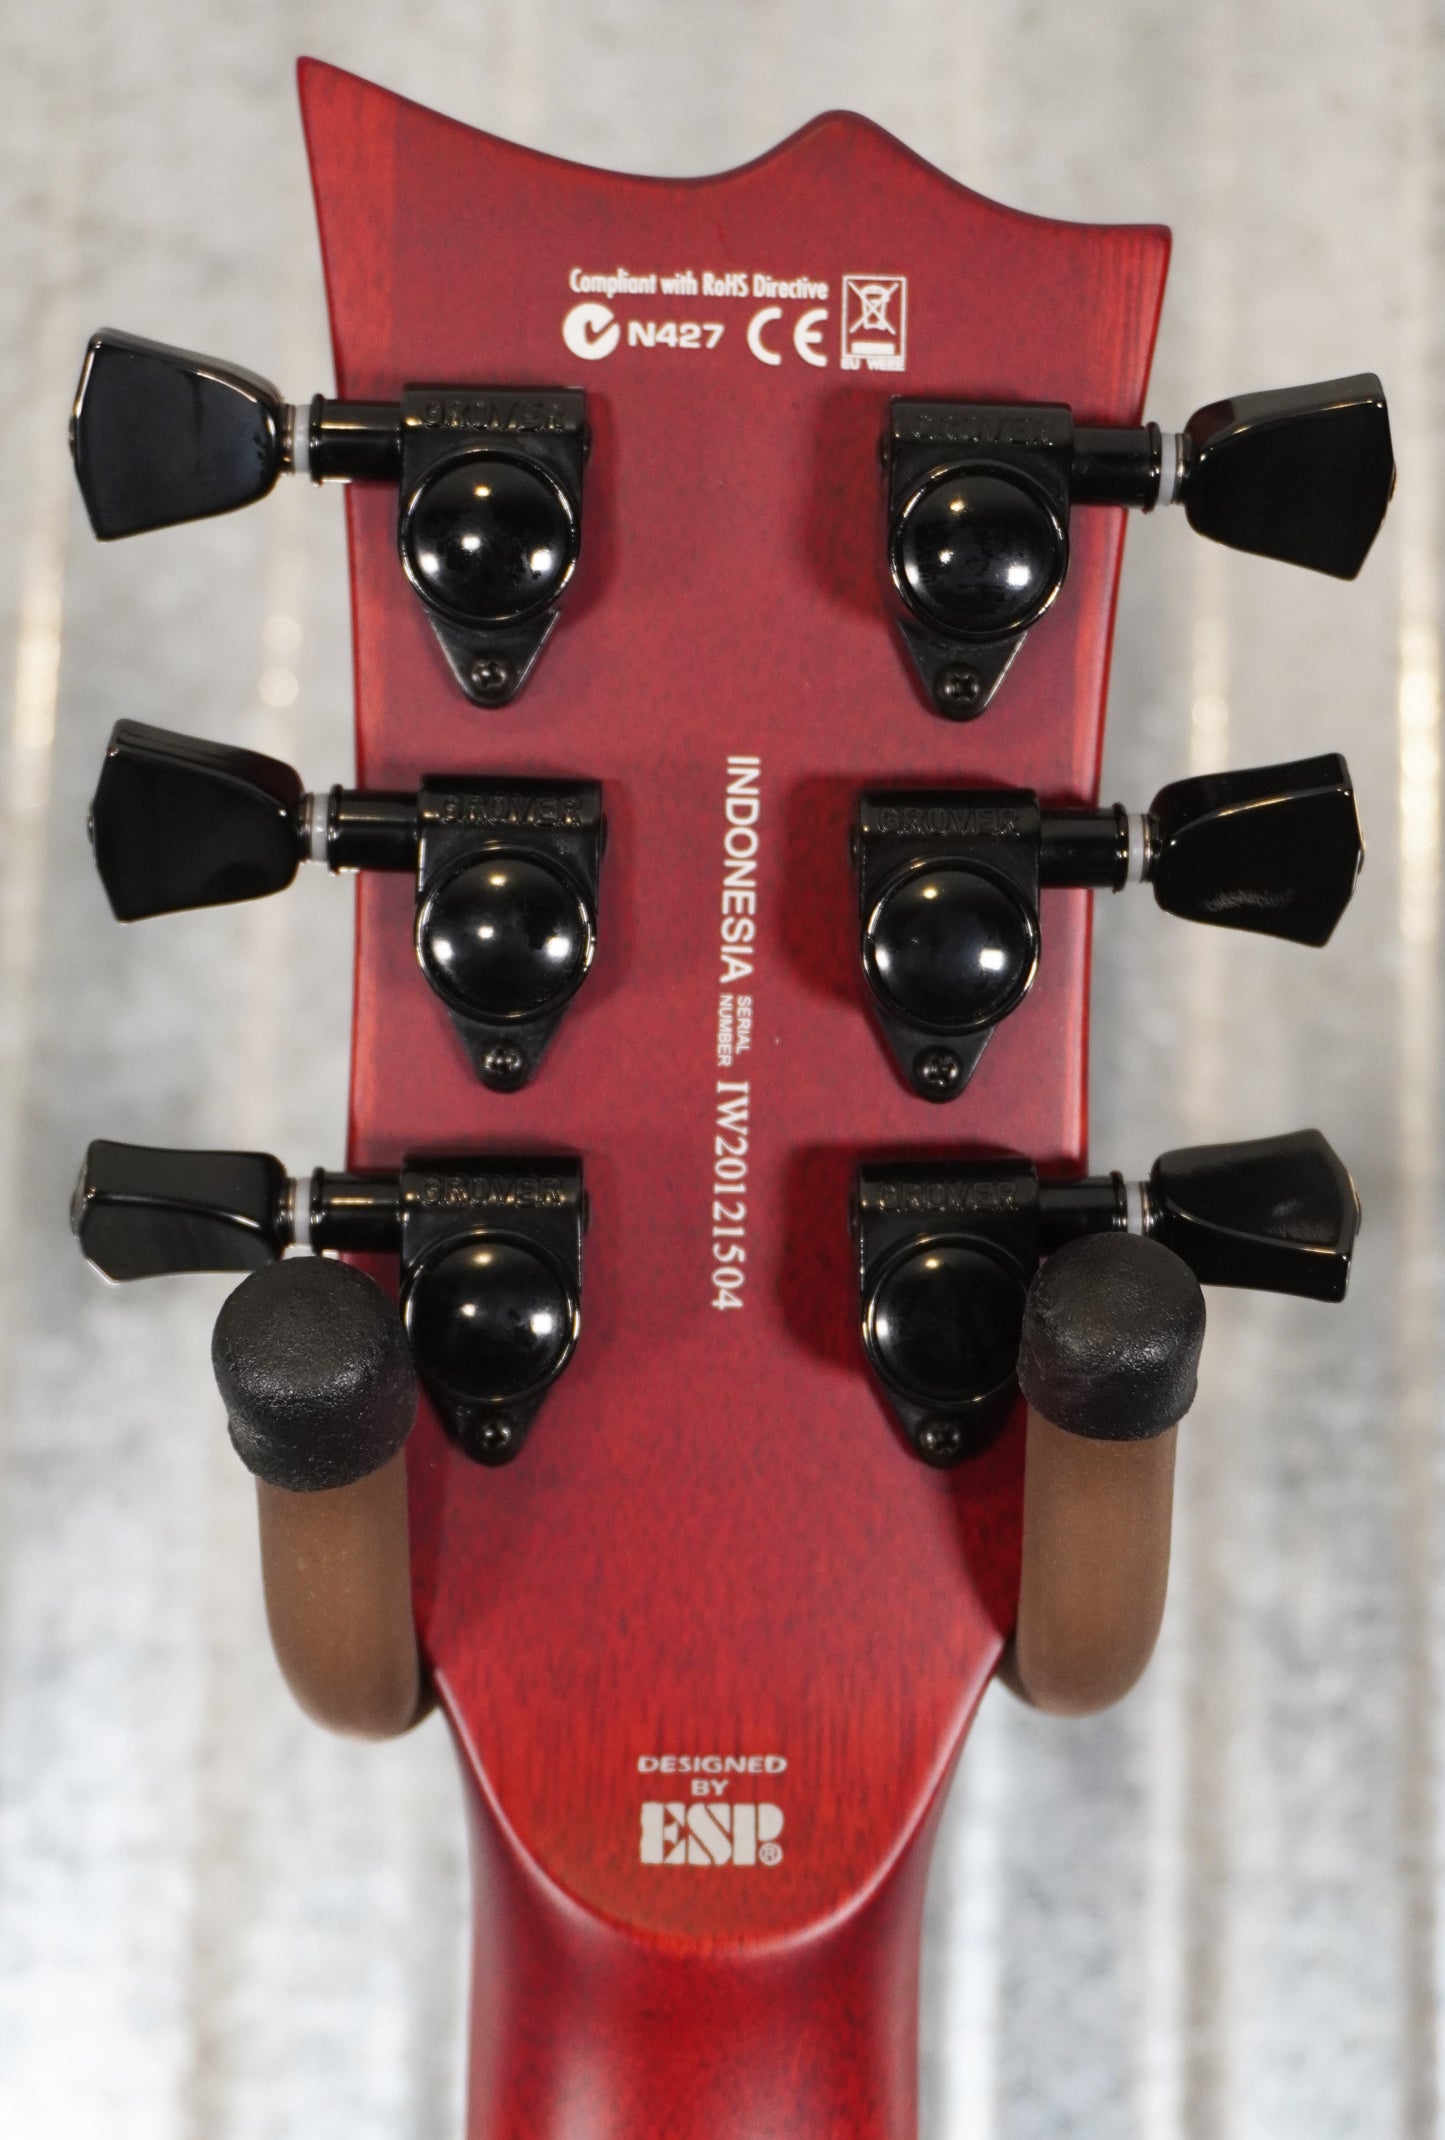 ESP LTD Viper-1000 Evertune See Thru Black Cherry Satin Guitar & Case LVIPER1000ETQMSTBCS #1504